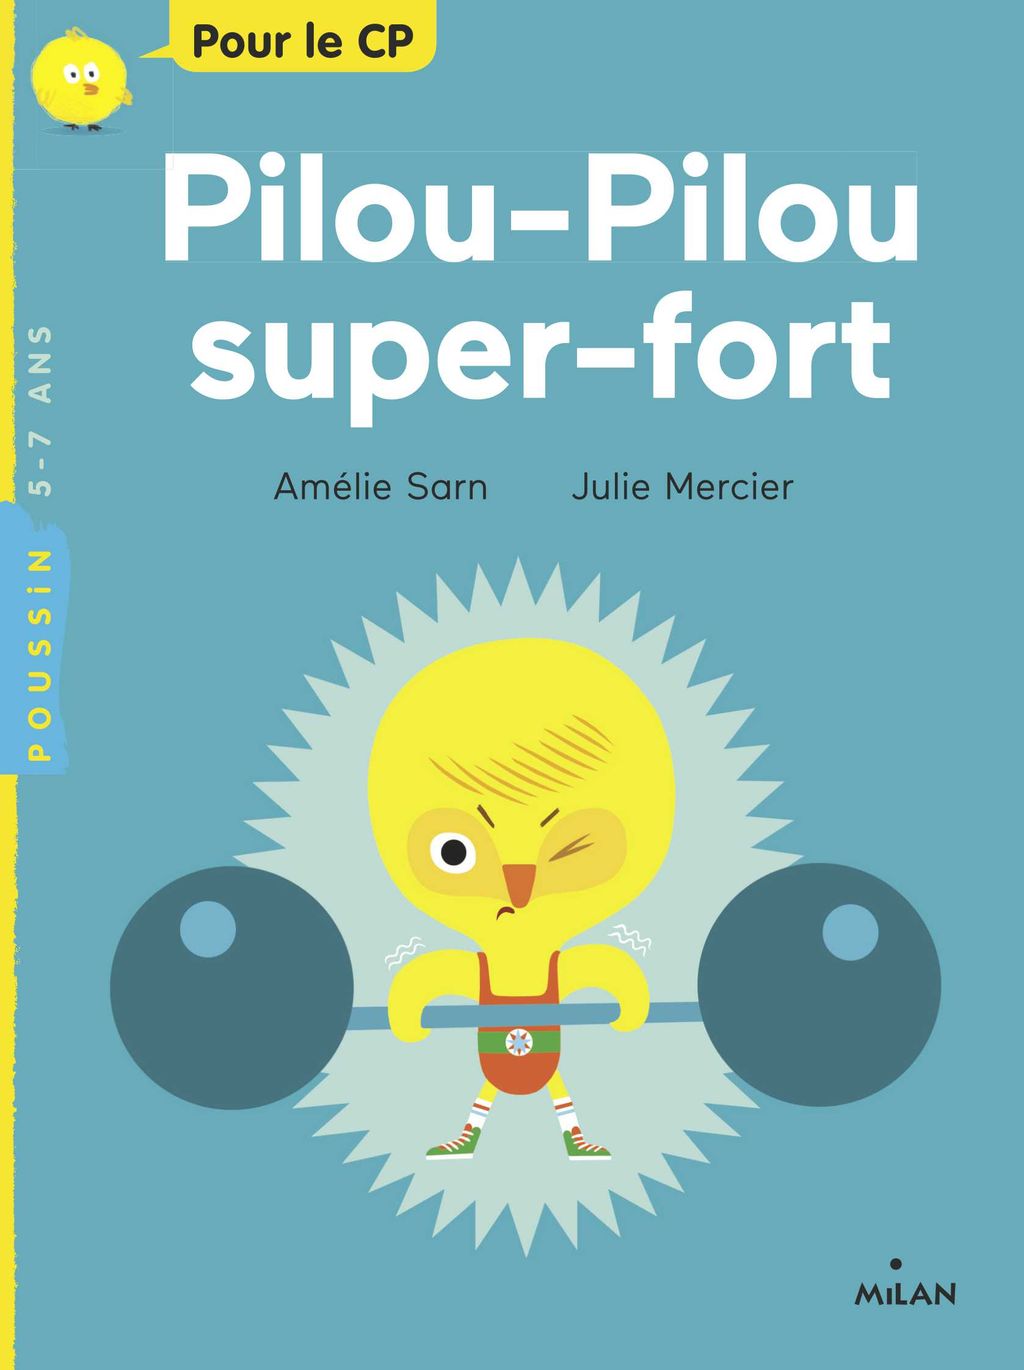 « Pilou-Pilou super-fort » cover